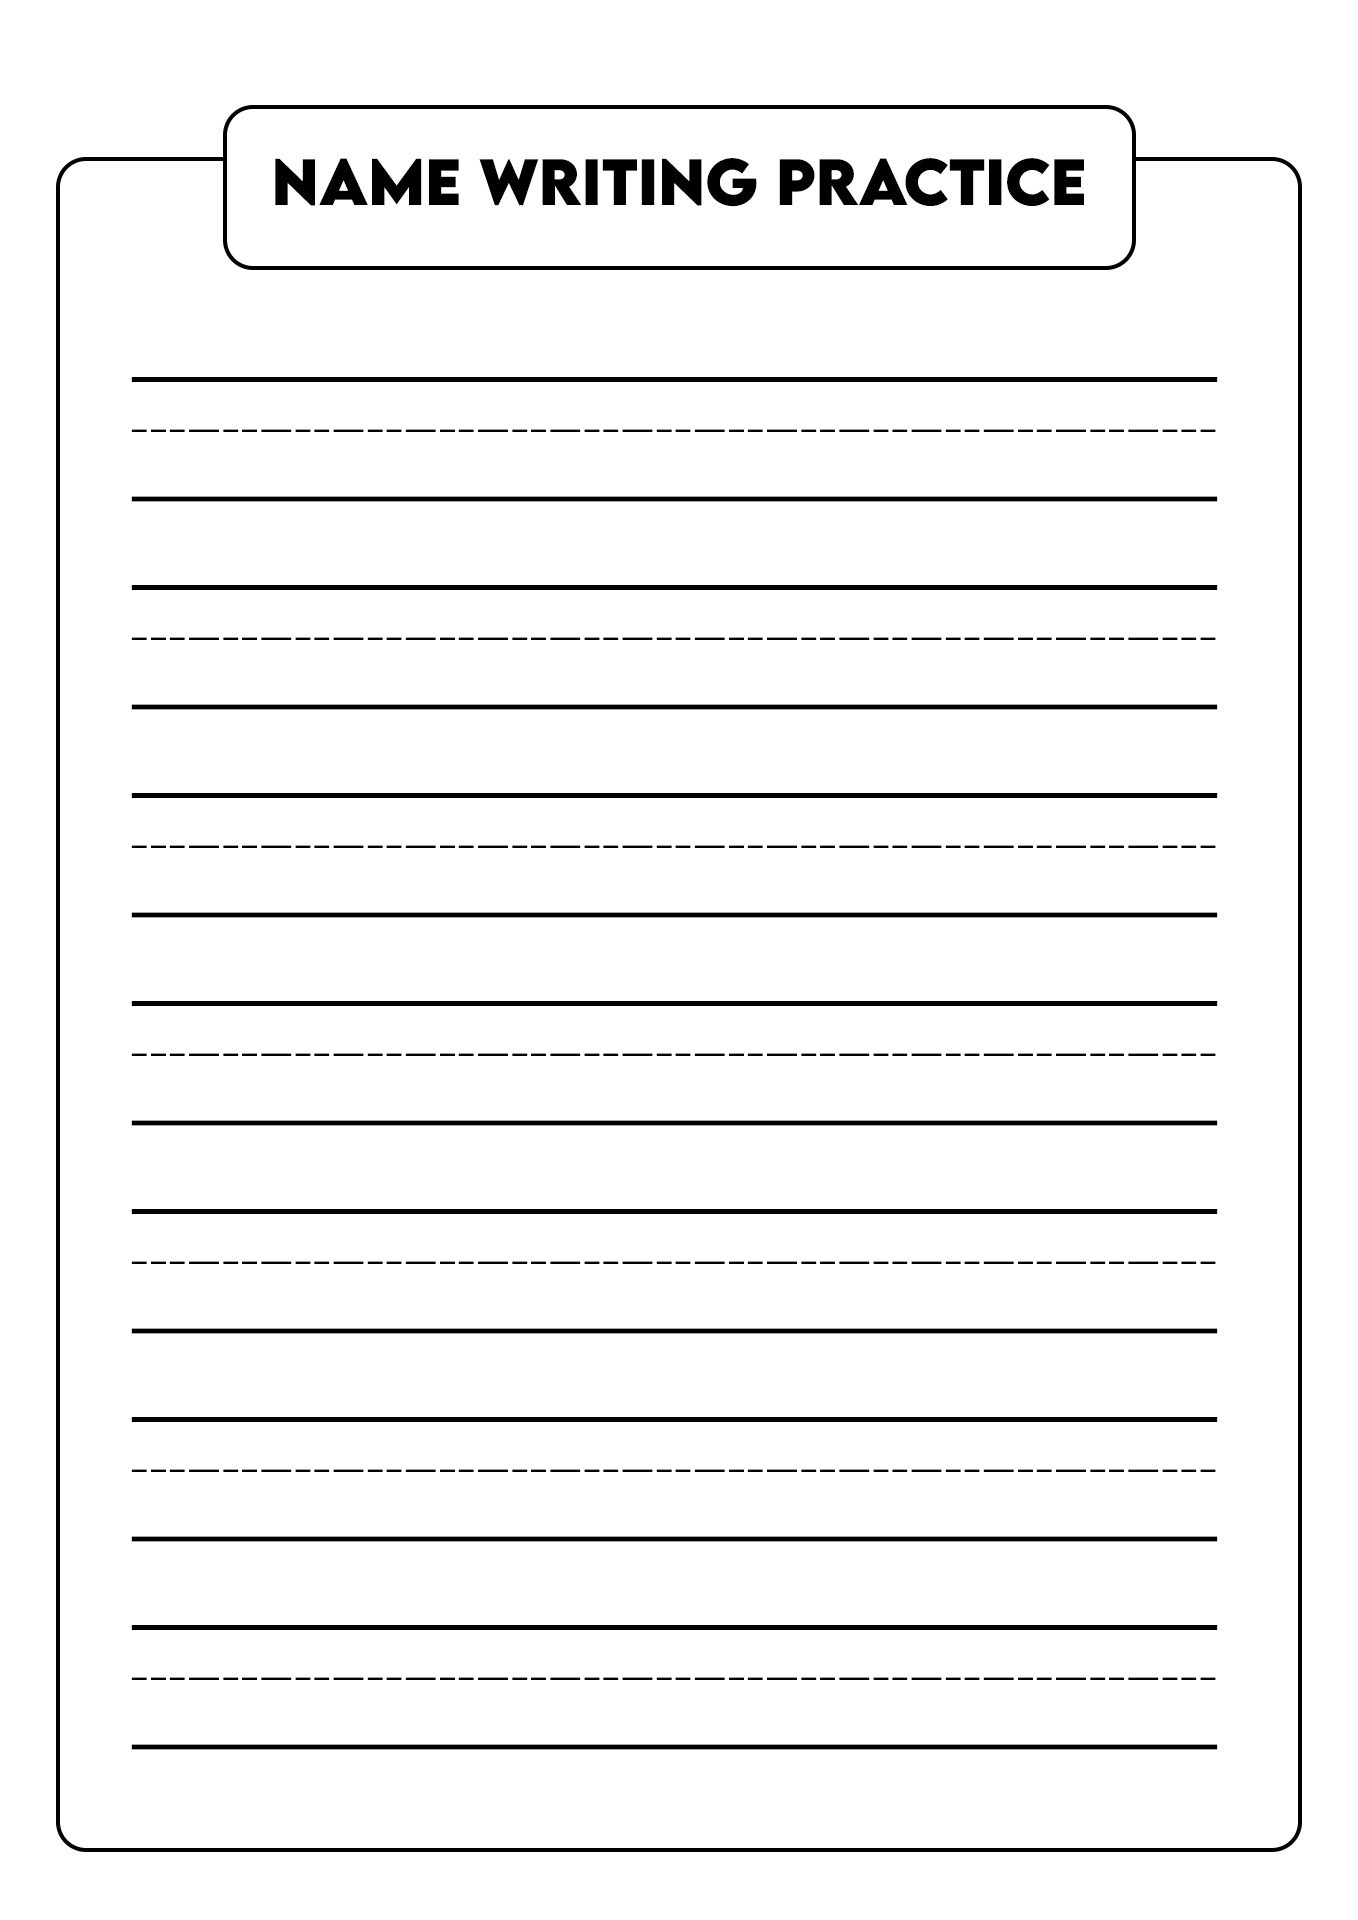 Kindergarten Name Writing Practice Worksheets Image